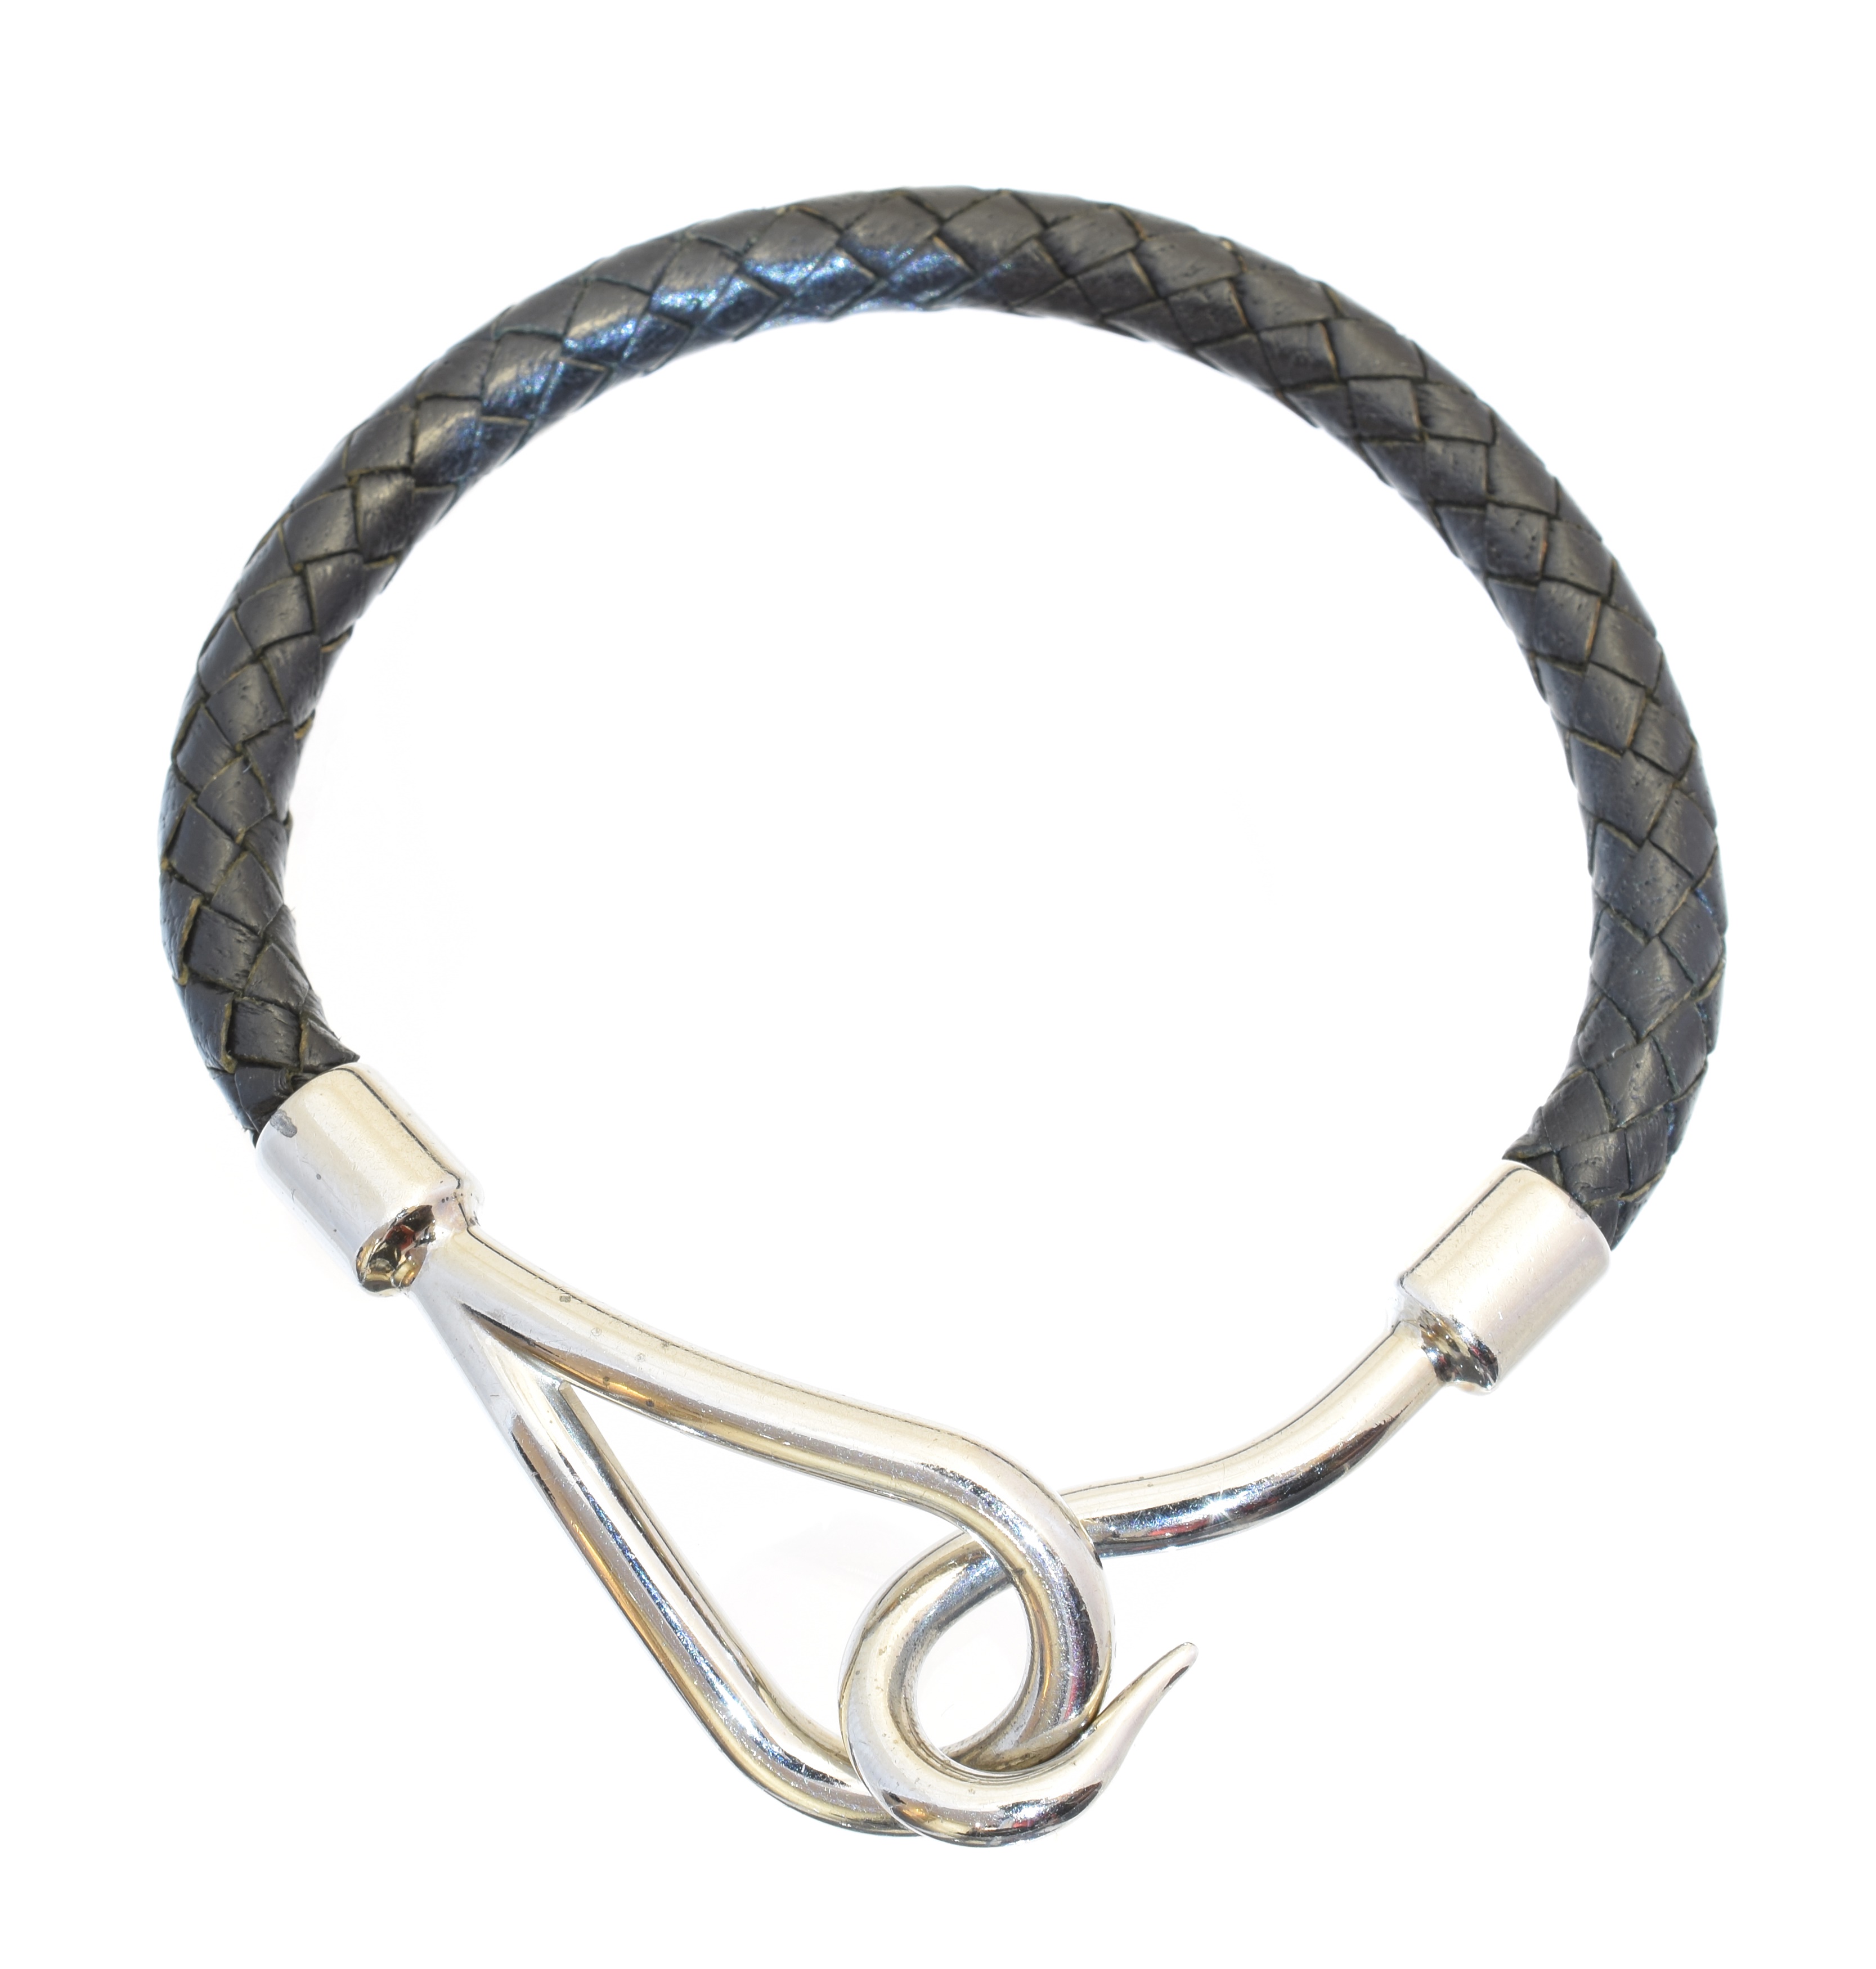 A Hermès Jumbo bracelet, the black swift calfskin braided strap with silver-tone hook fastening, signed Hermès.